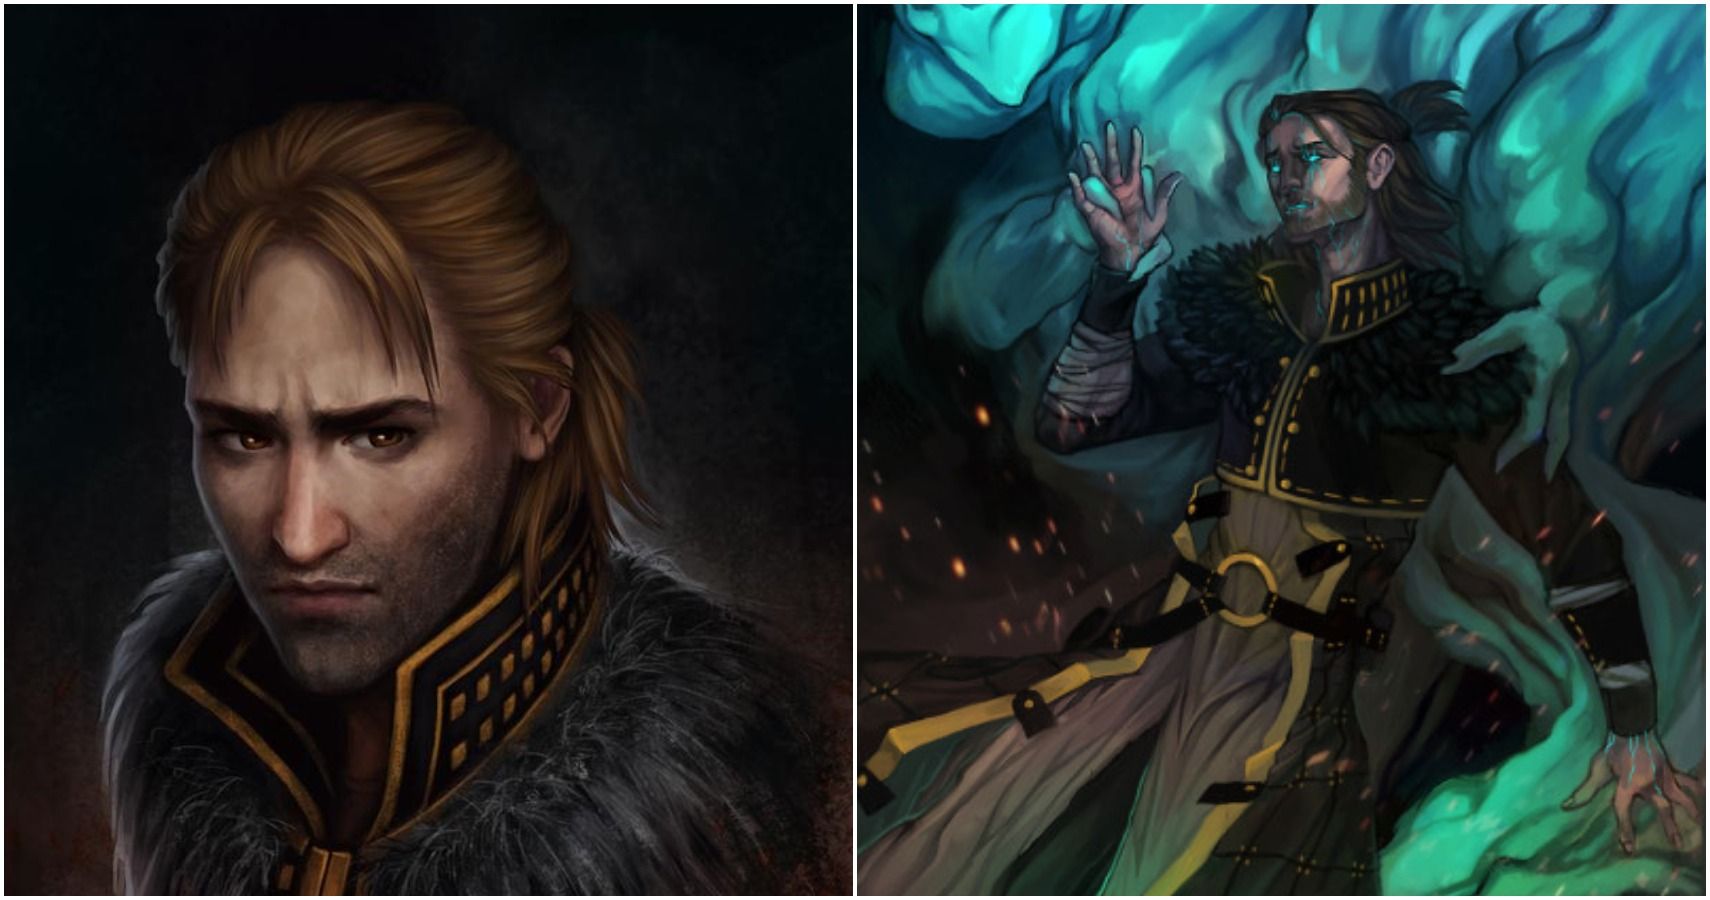 Anders - Characters - Awakening, Dragon Age Origins & Awakening